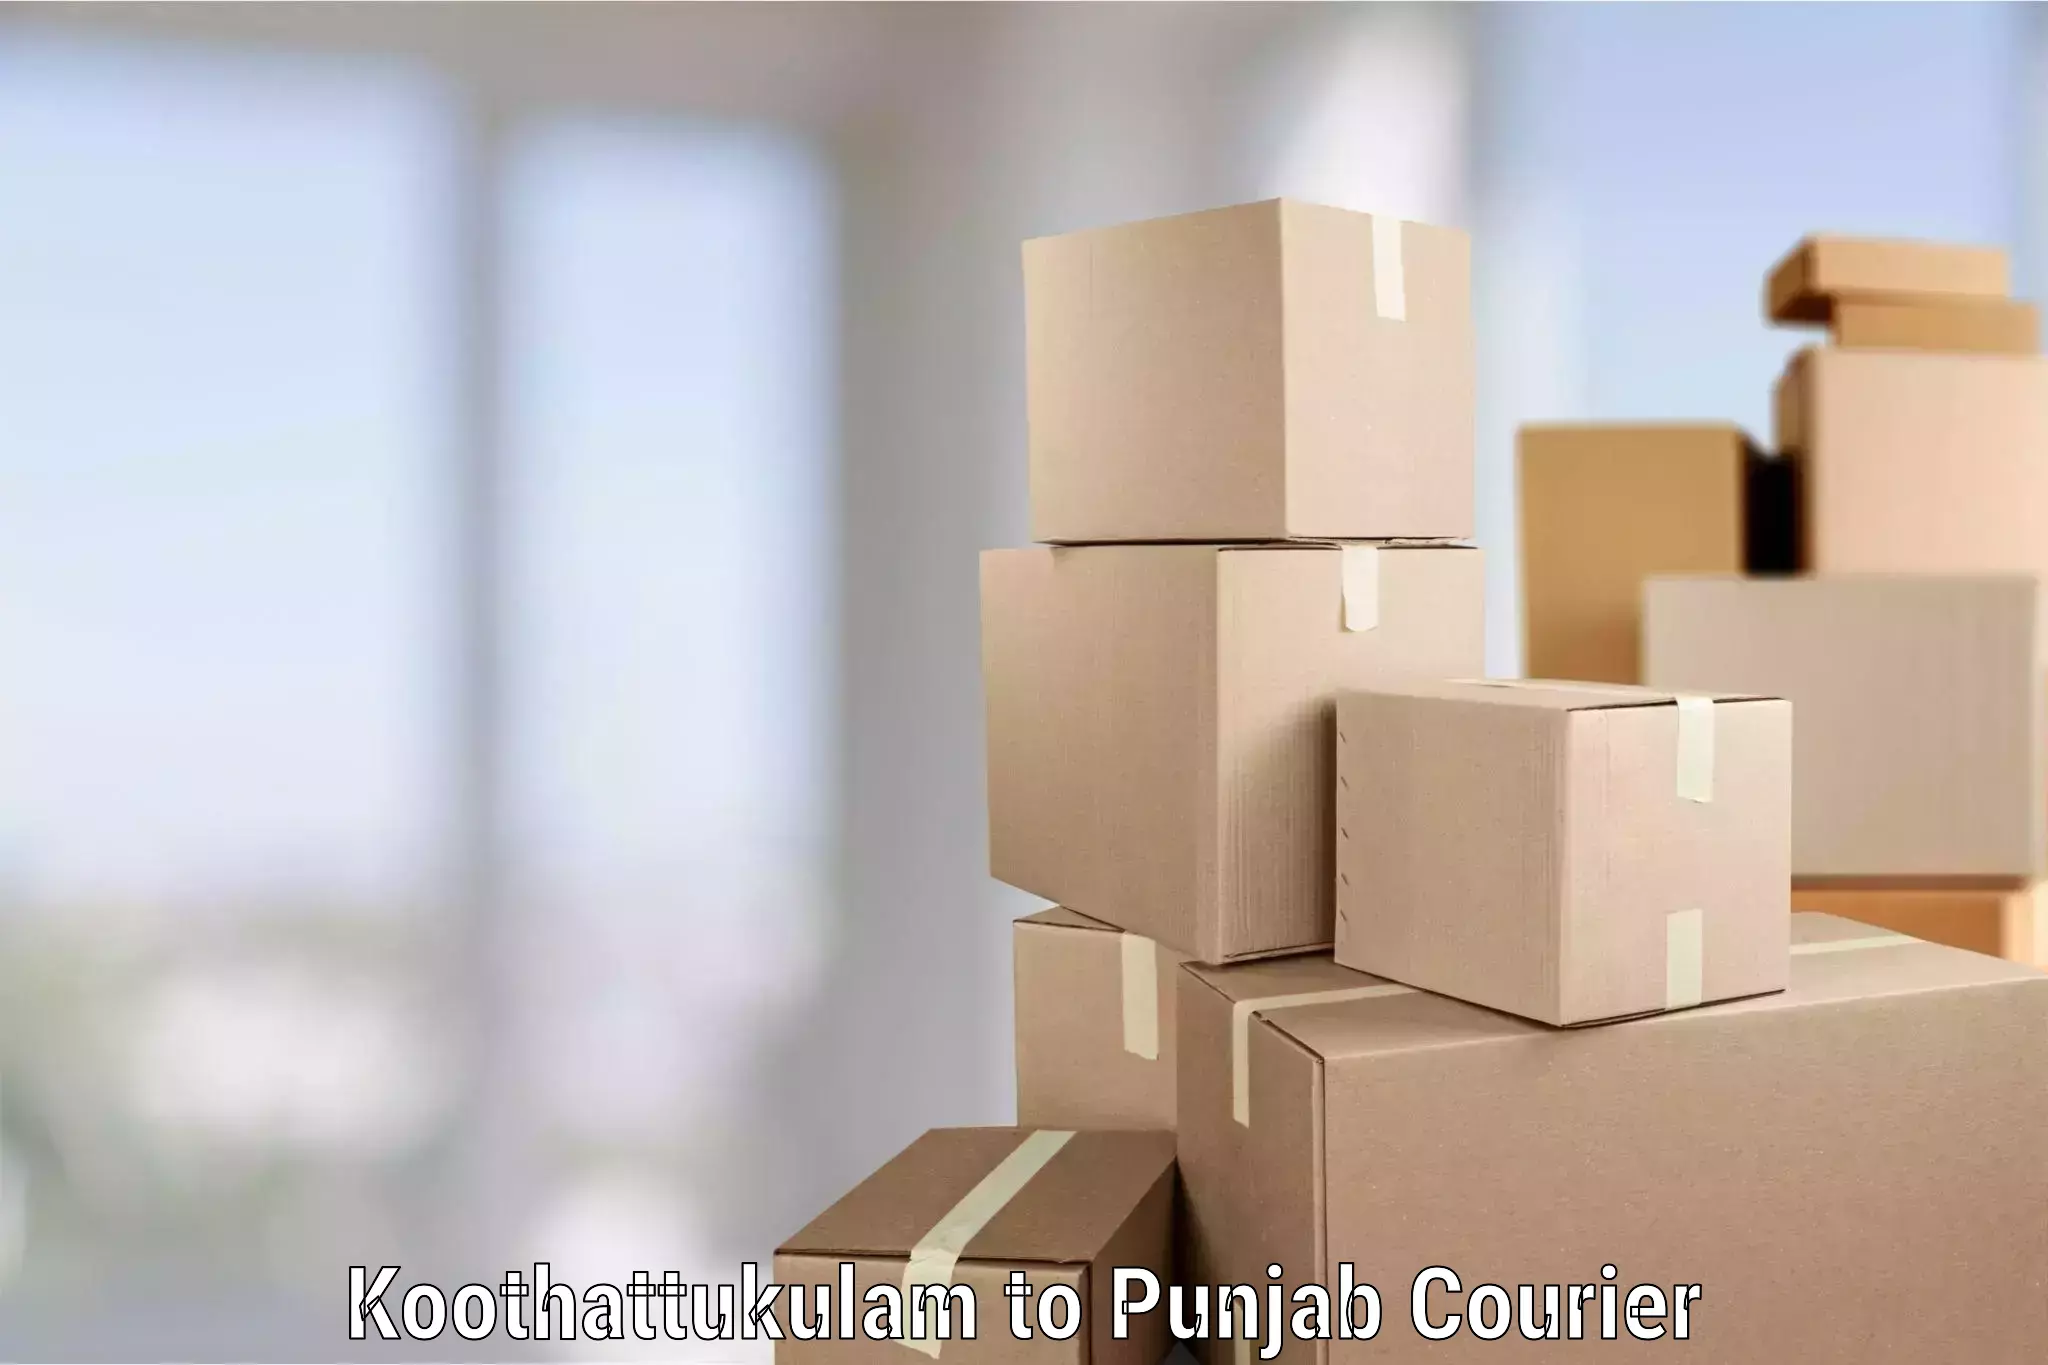 Professional packing services Koothattukulam to Punjab